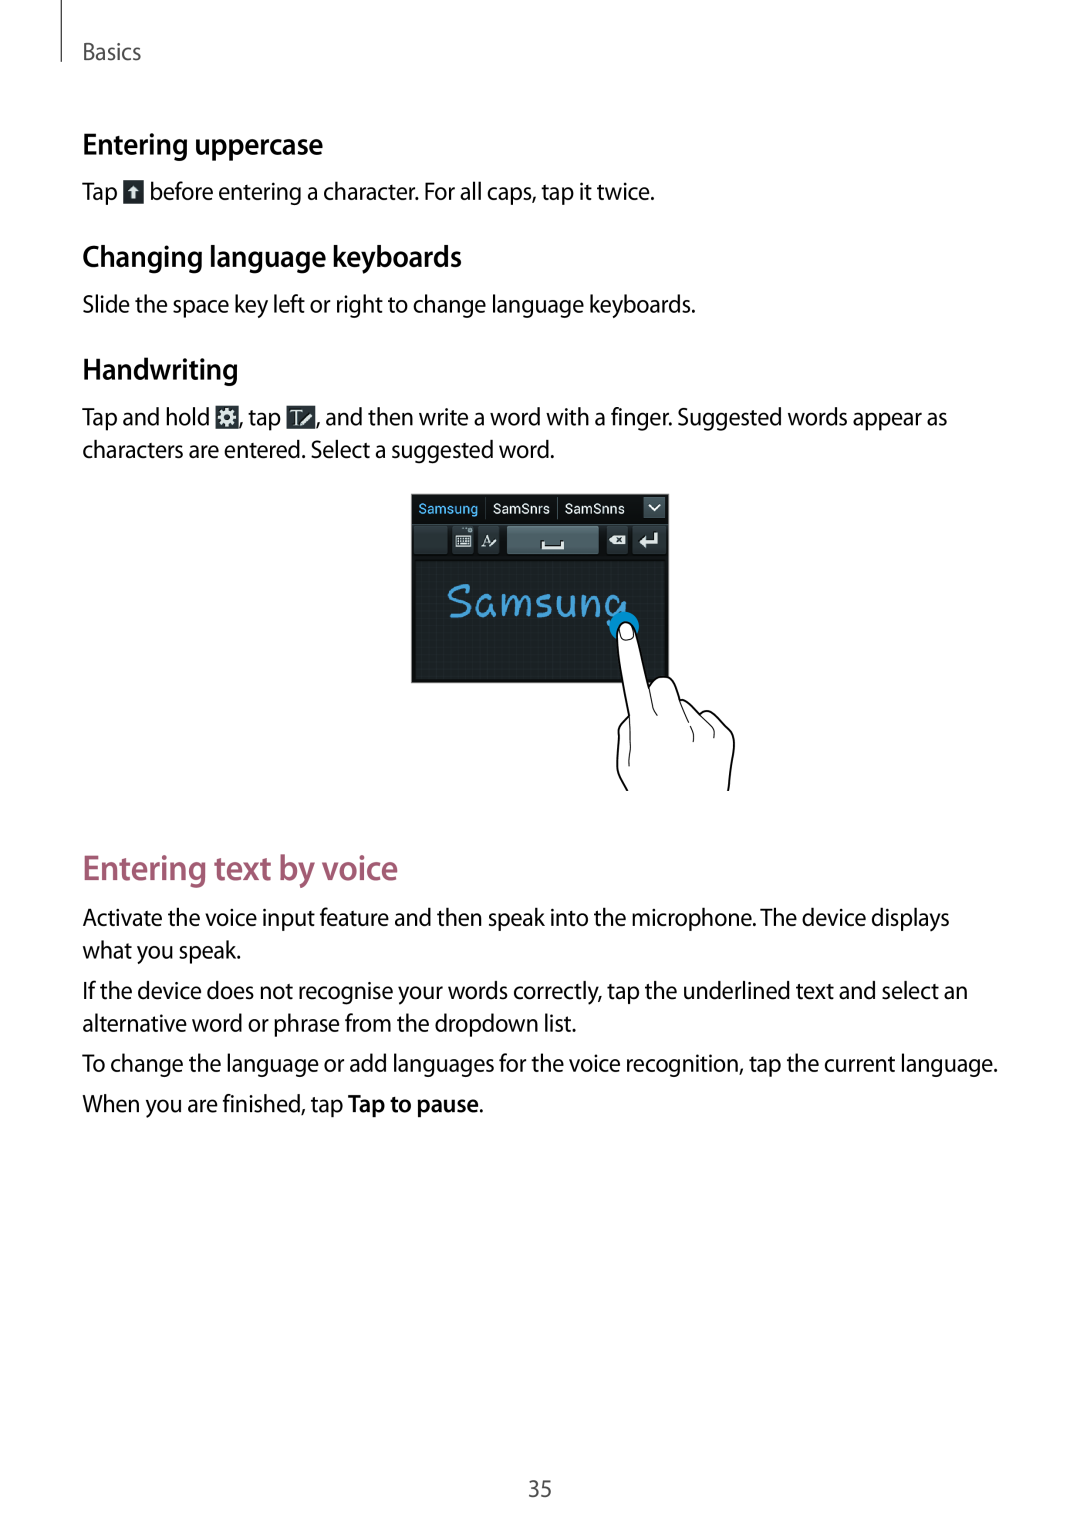 Samsung GT-I8730ZWAITV manual Entering text by voice, Entering uppercase, Changing language keyboards, Handwriting, Basics 